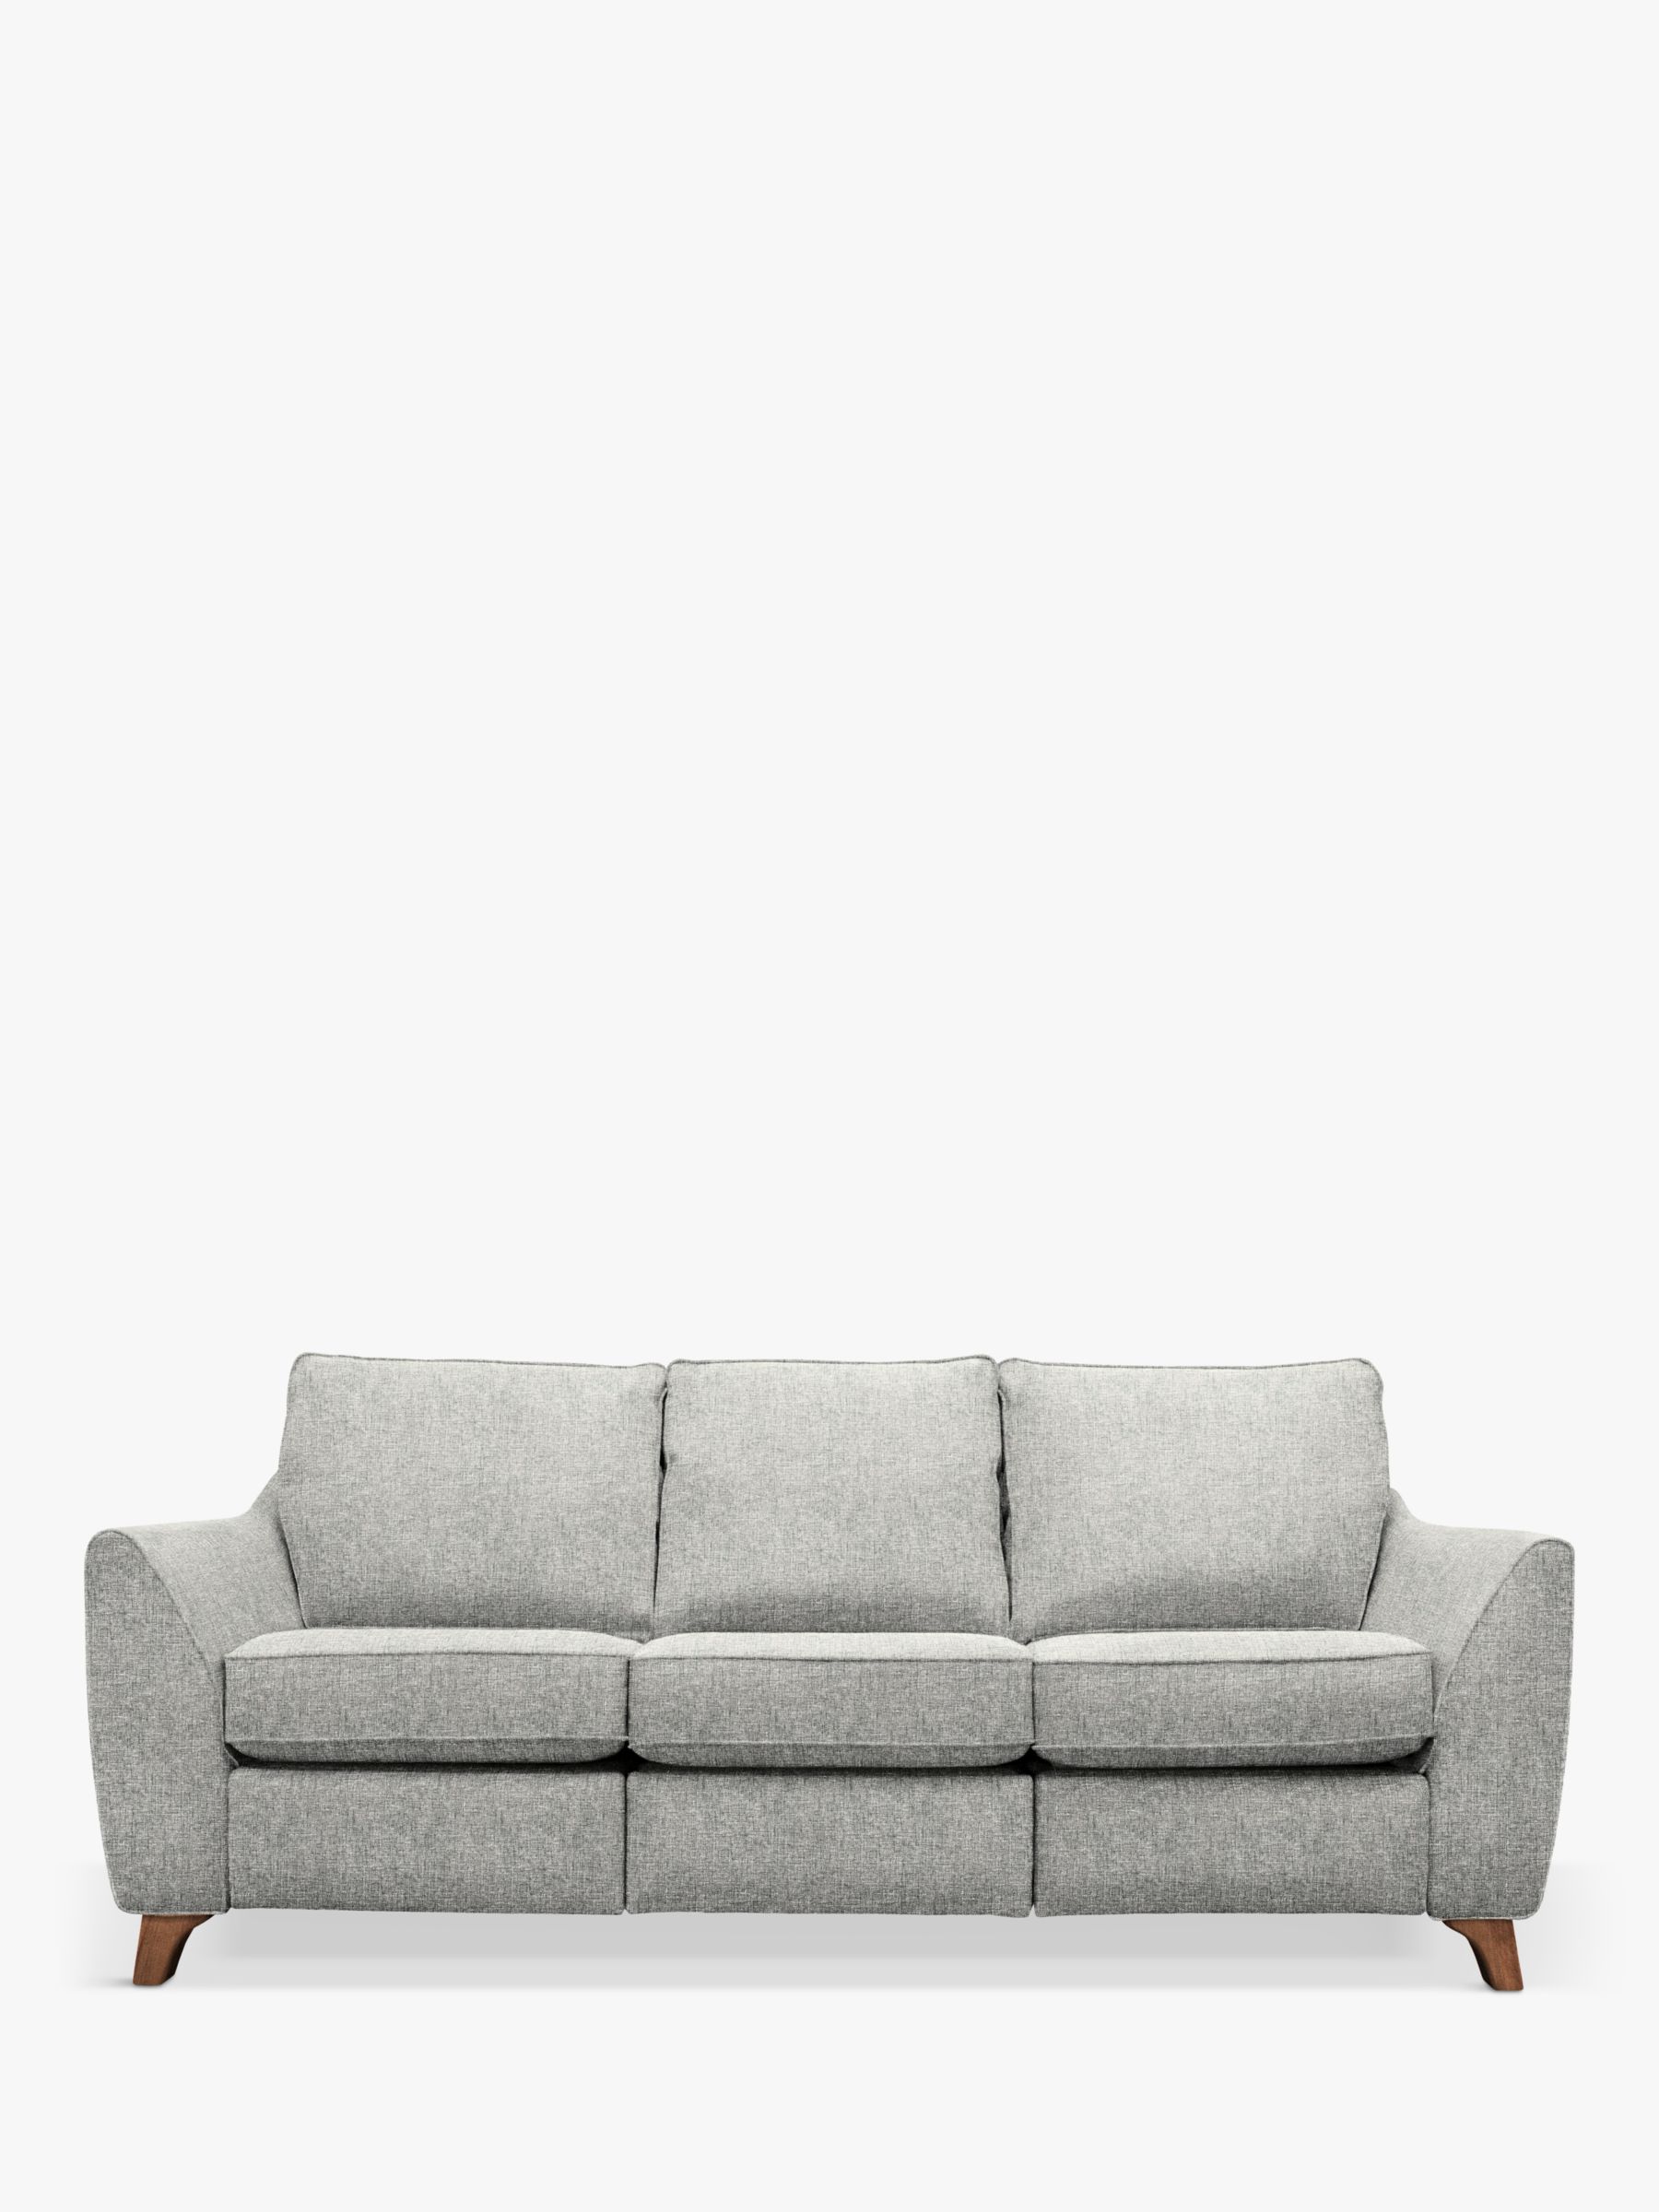 G Plan Vintage The Sixty Eight Large 3 Seater Sofa, Sorren Grey